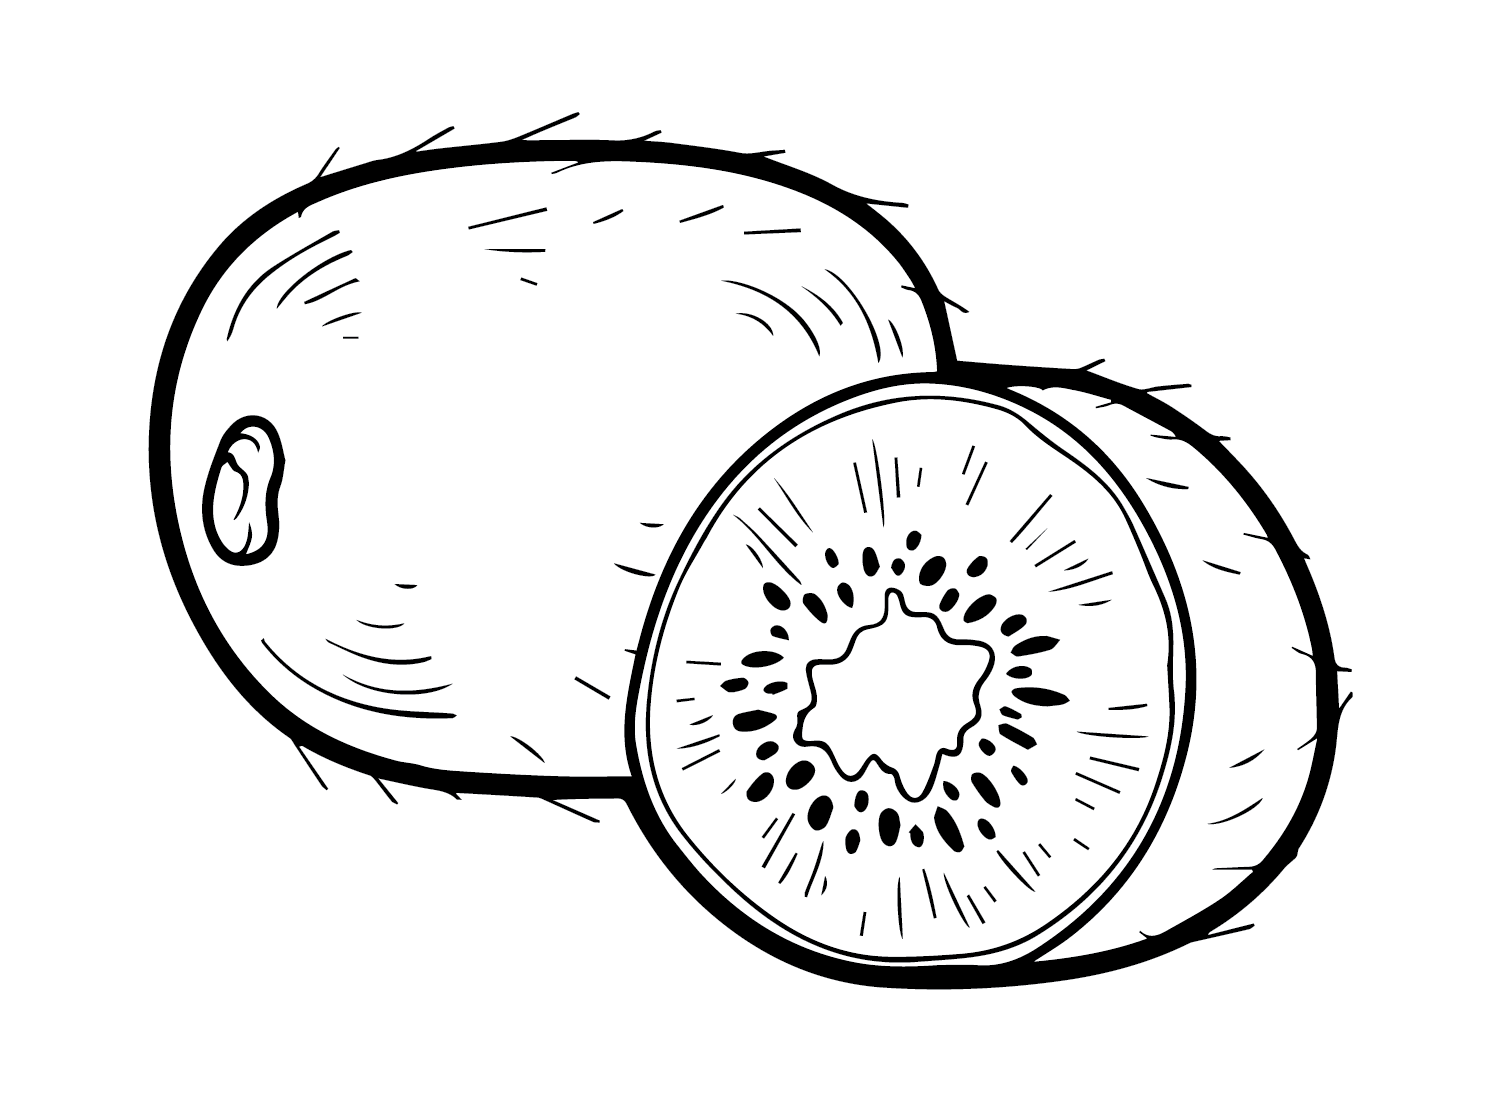 Kiwifruit Vrij van Kiwifruit